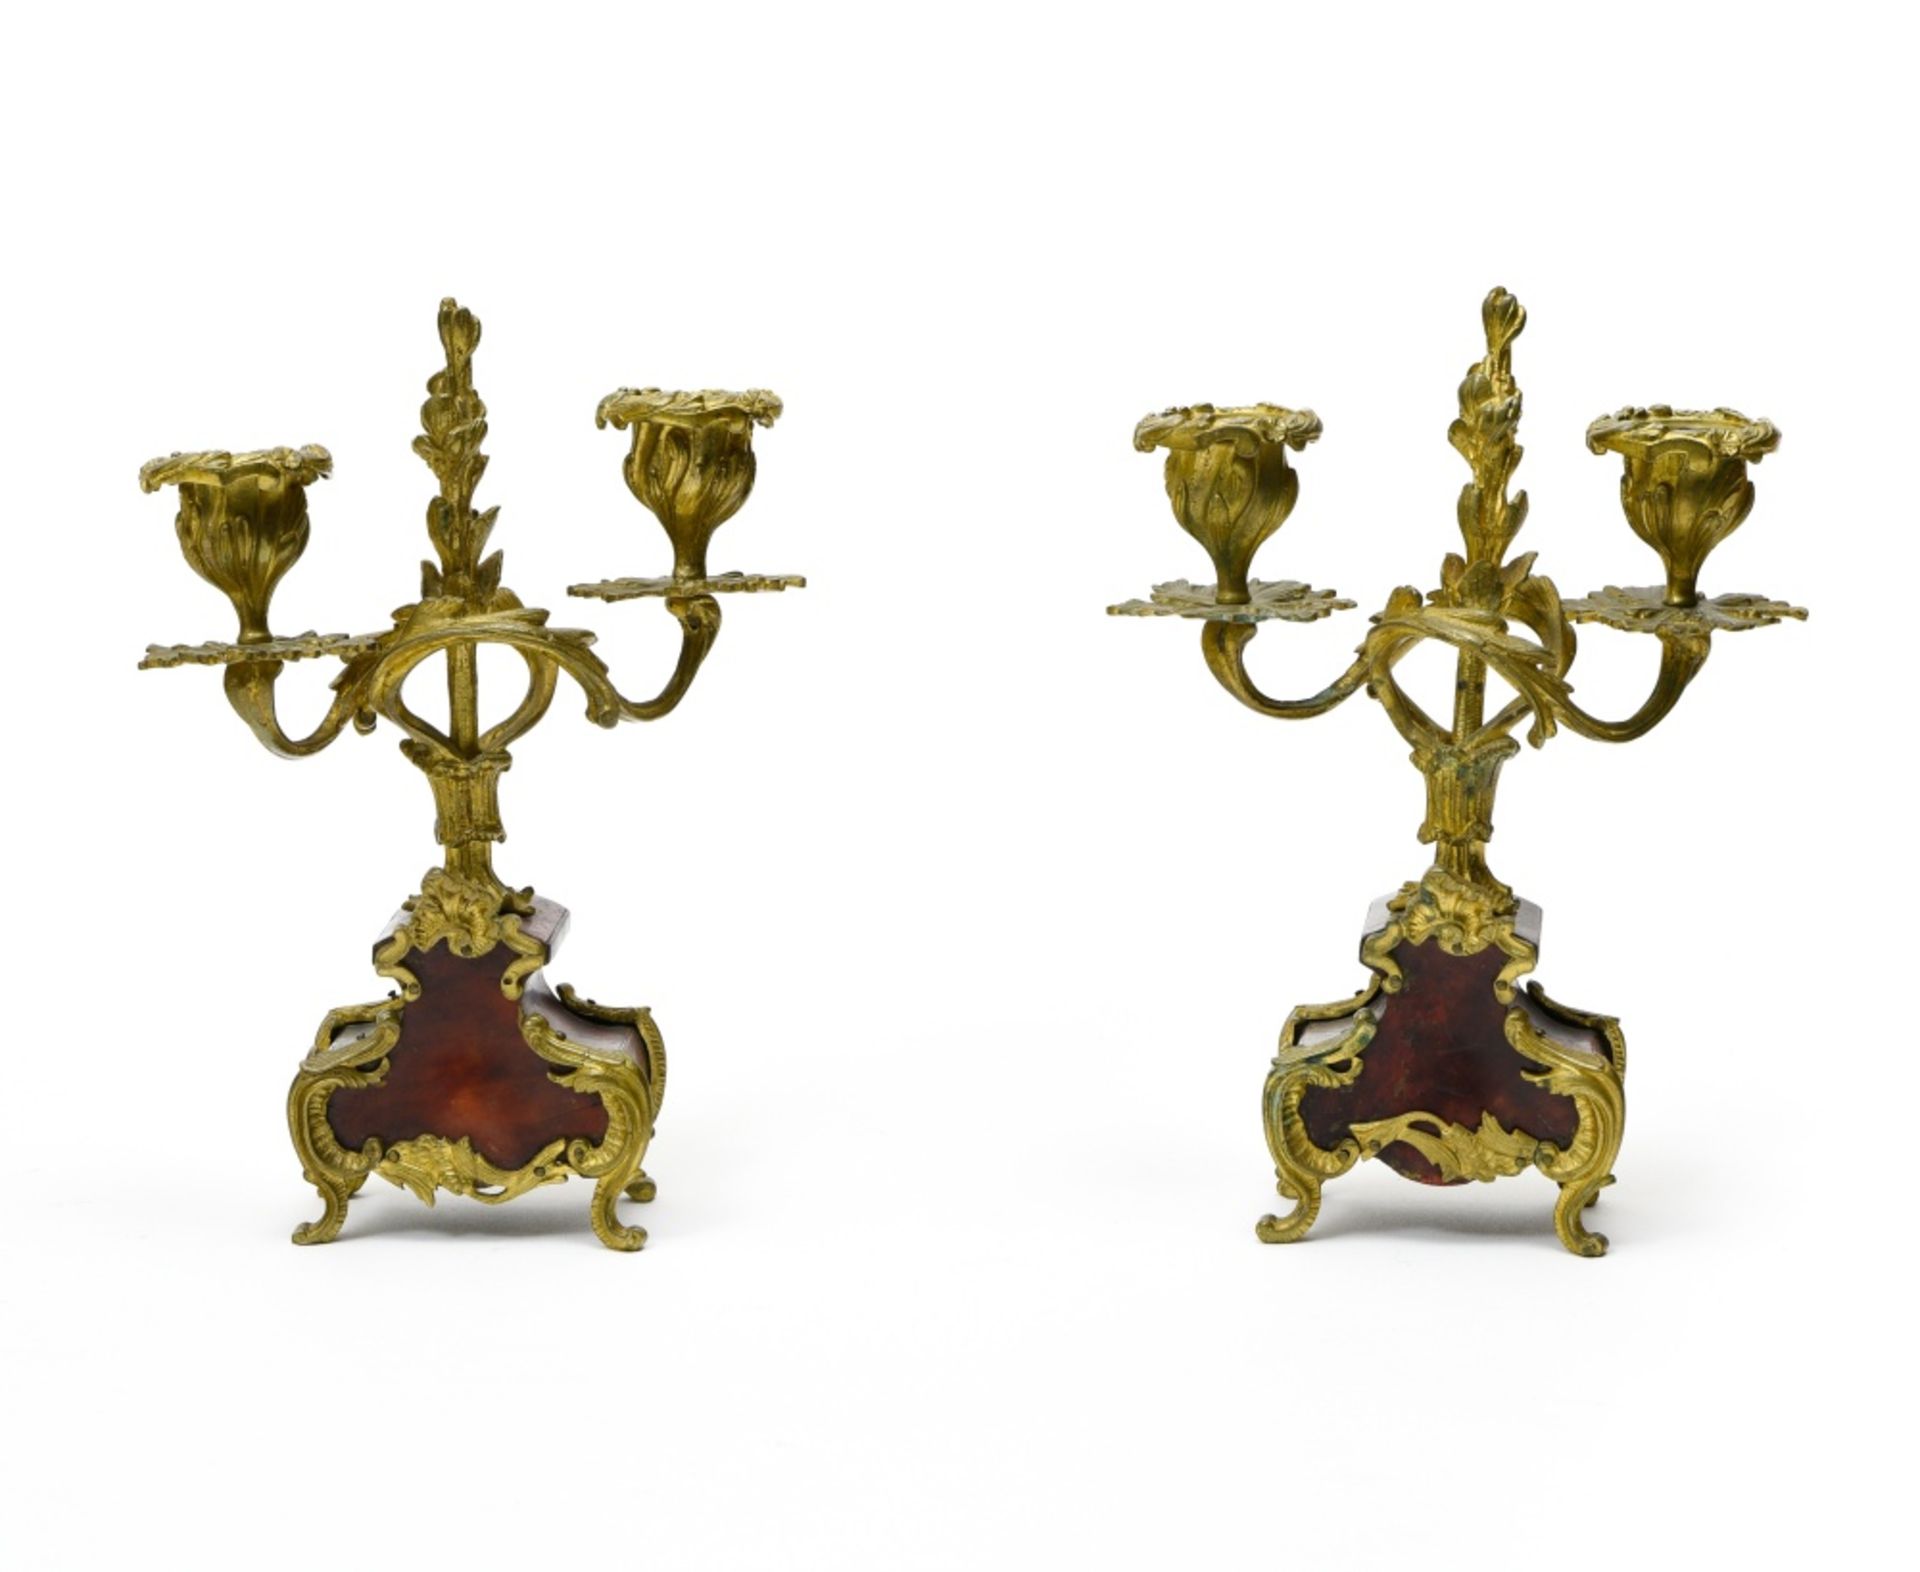 Napoleon III work Pair of candlesticks, Bronze and tortoiseshell. Height (cm) : 24 - Width (cm) :